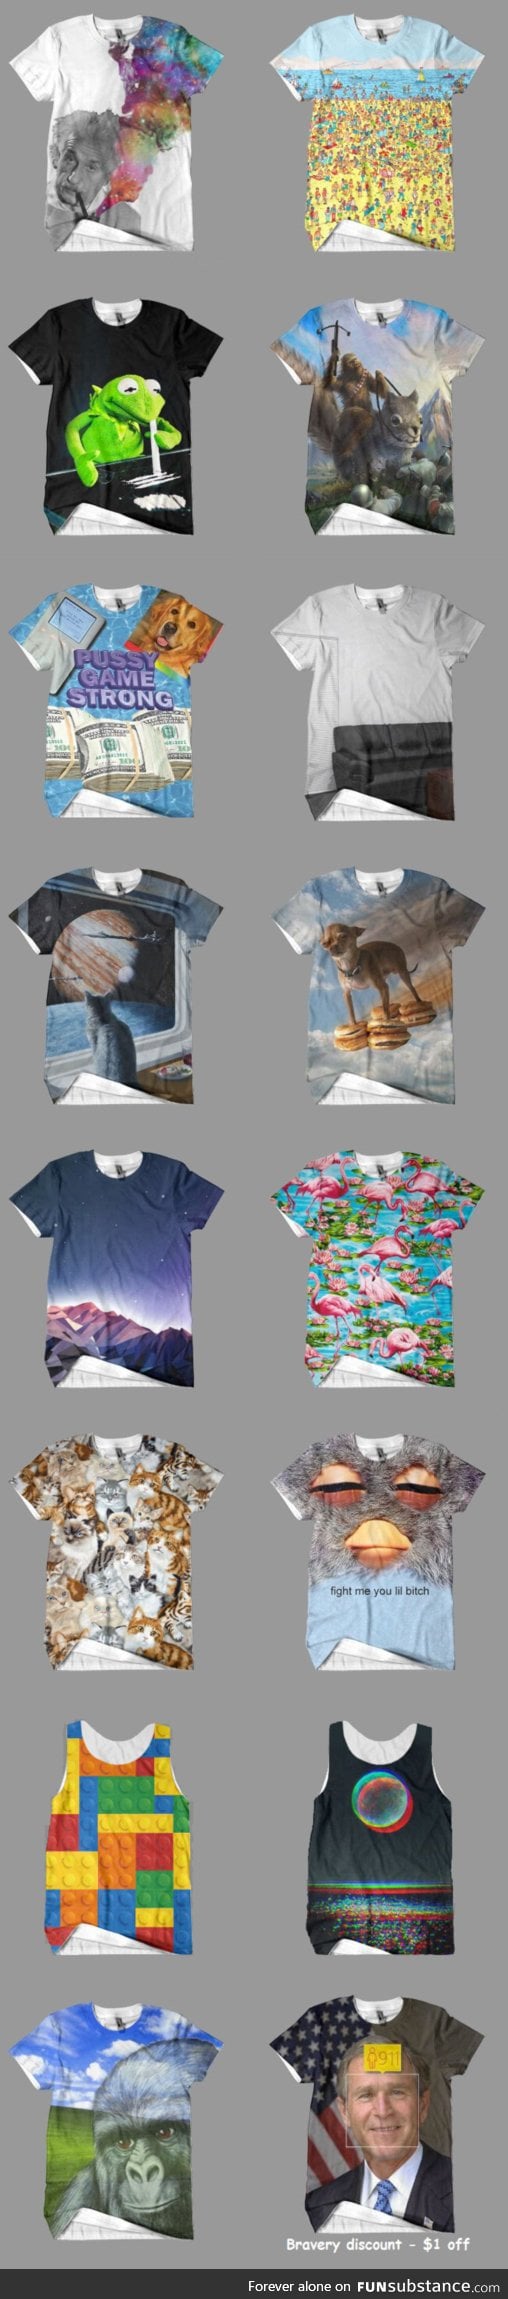 When the internet designs shirts